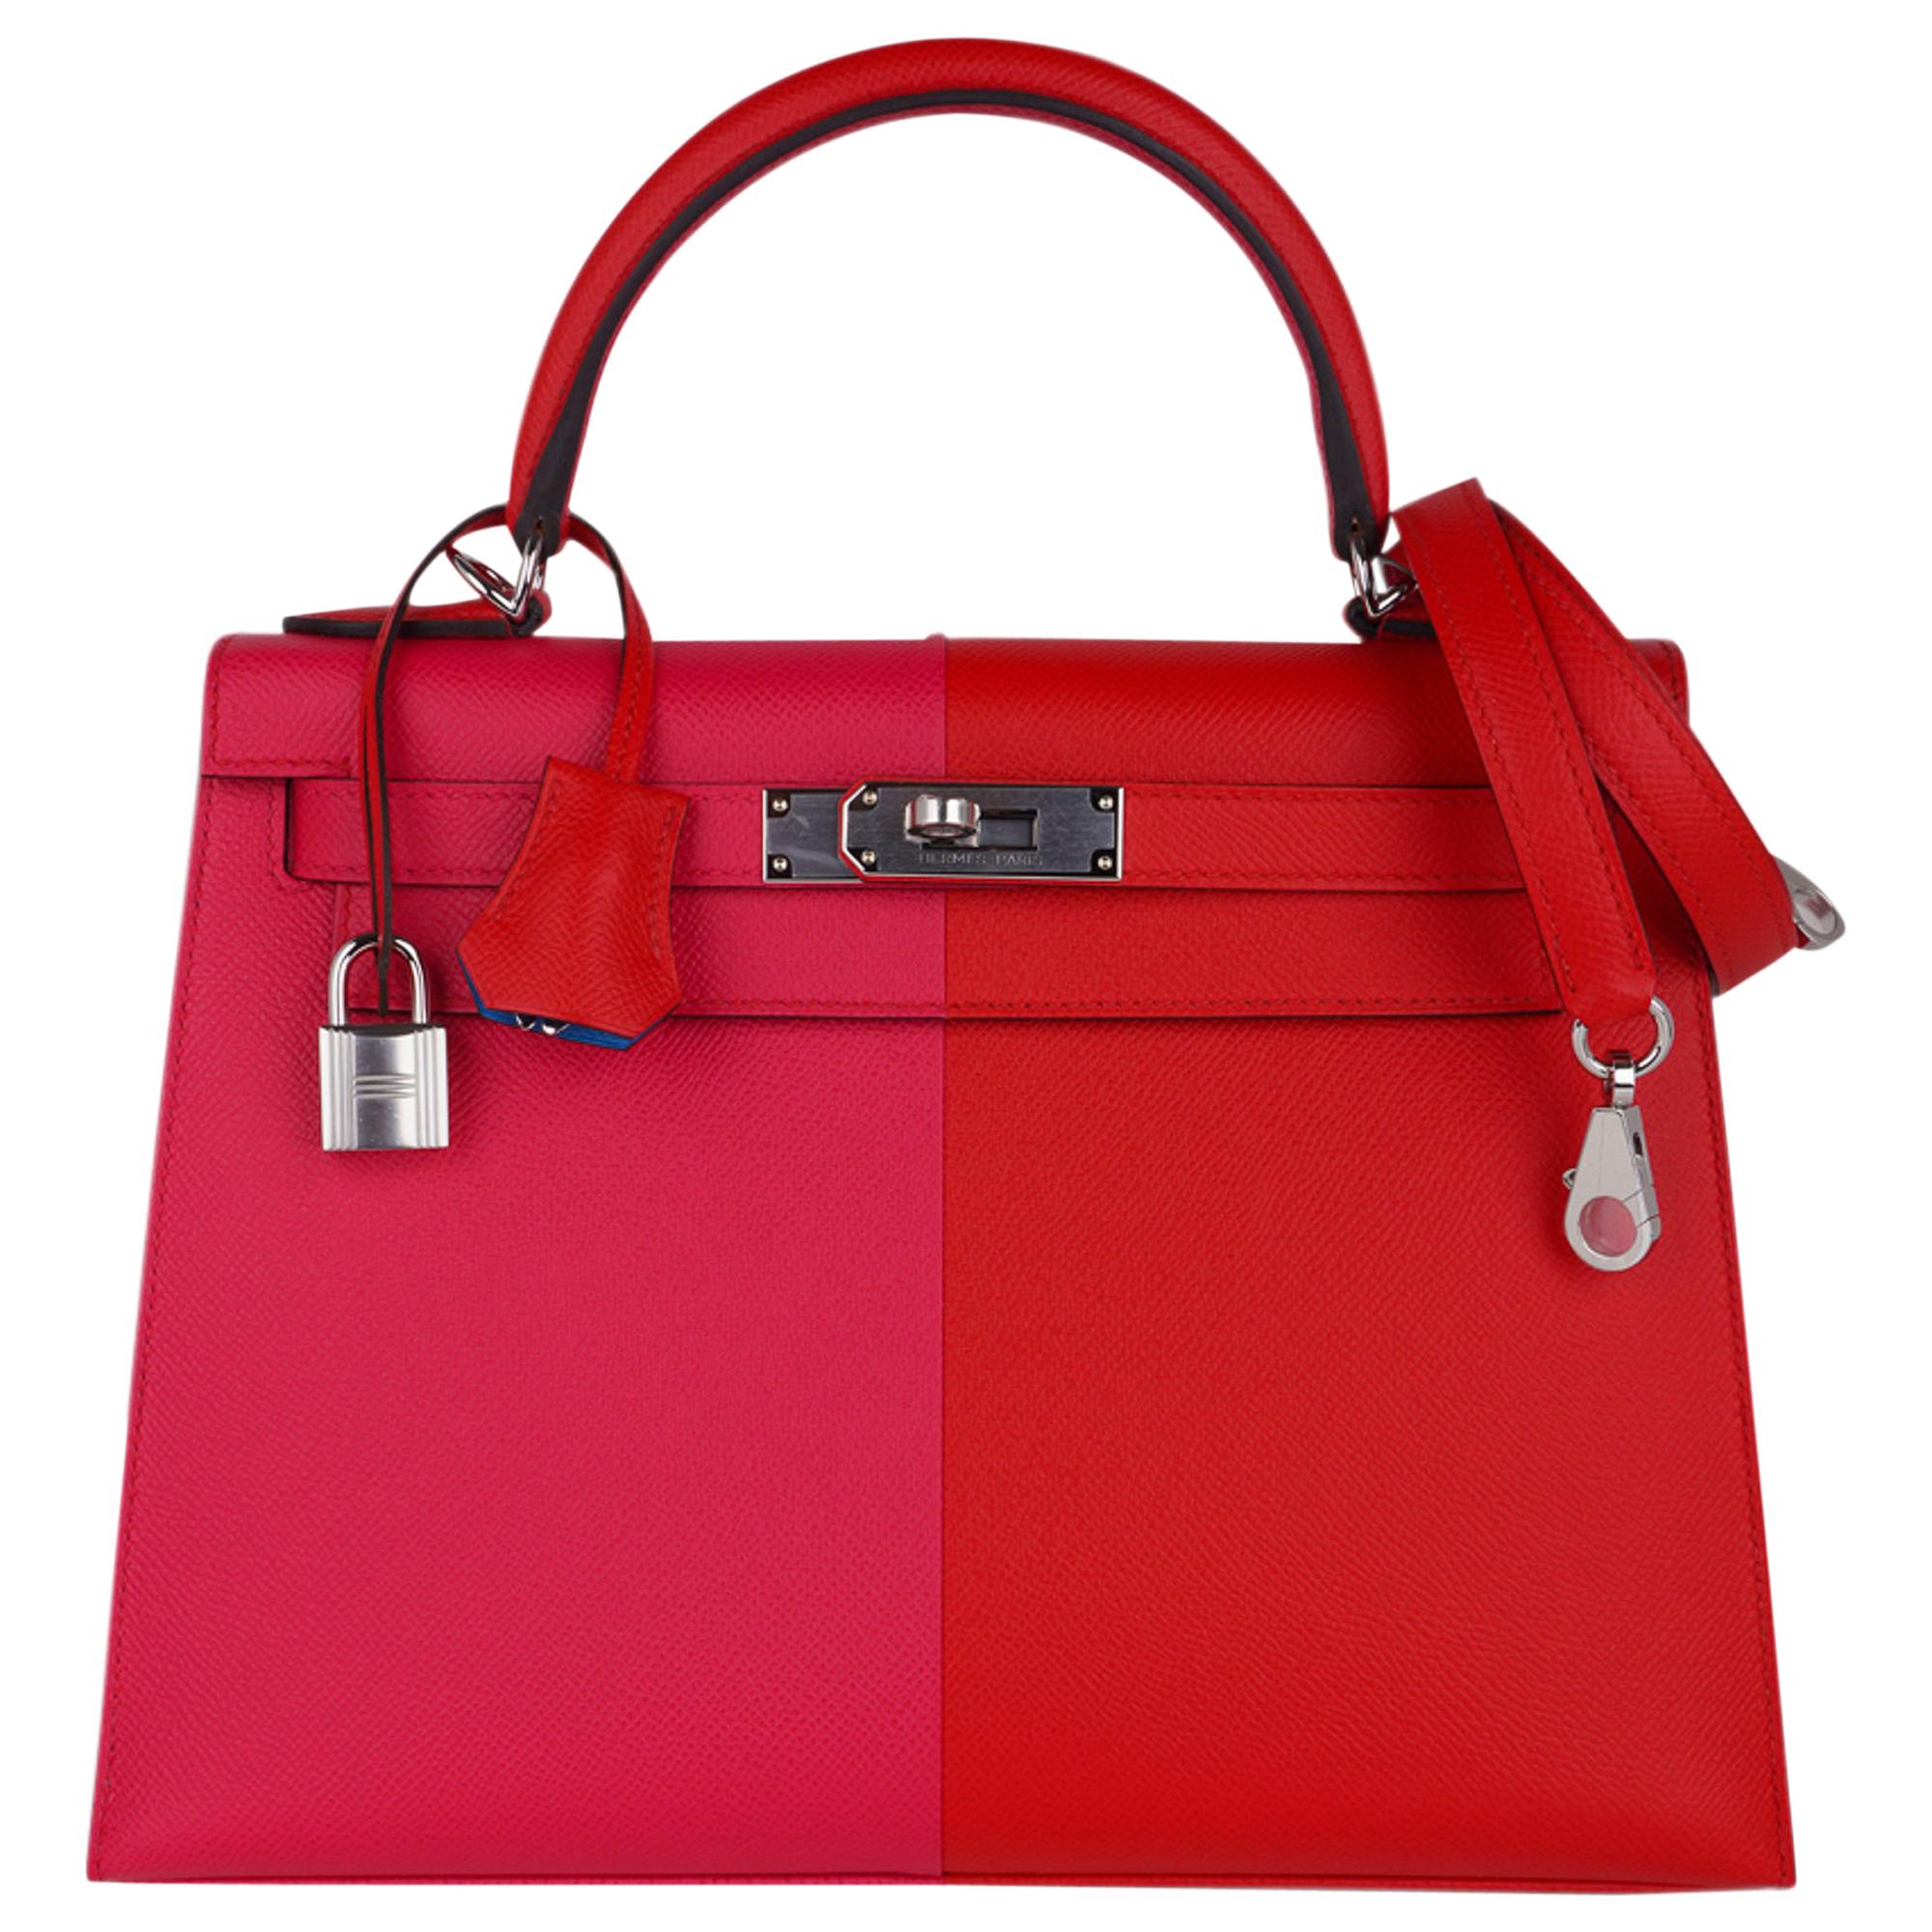 Size Comparison of the new Givenchy Mini Antigona Bag - Spotted Fashion